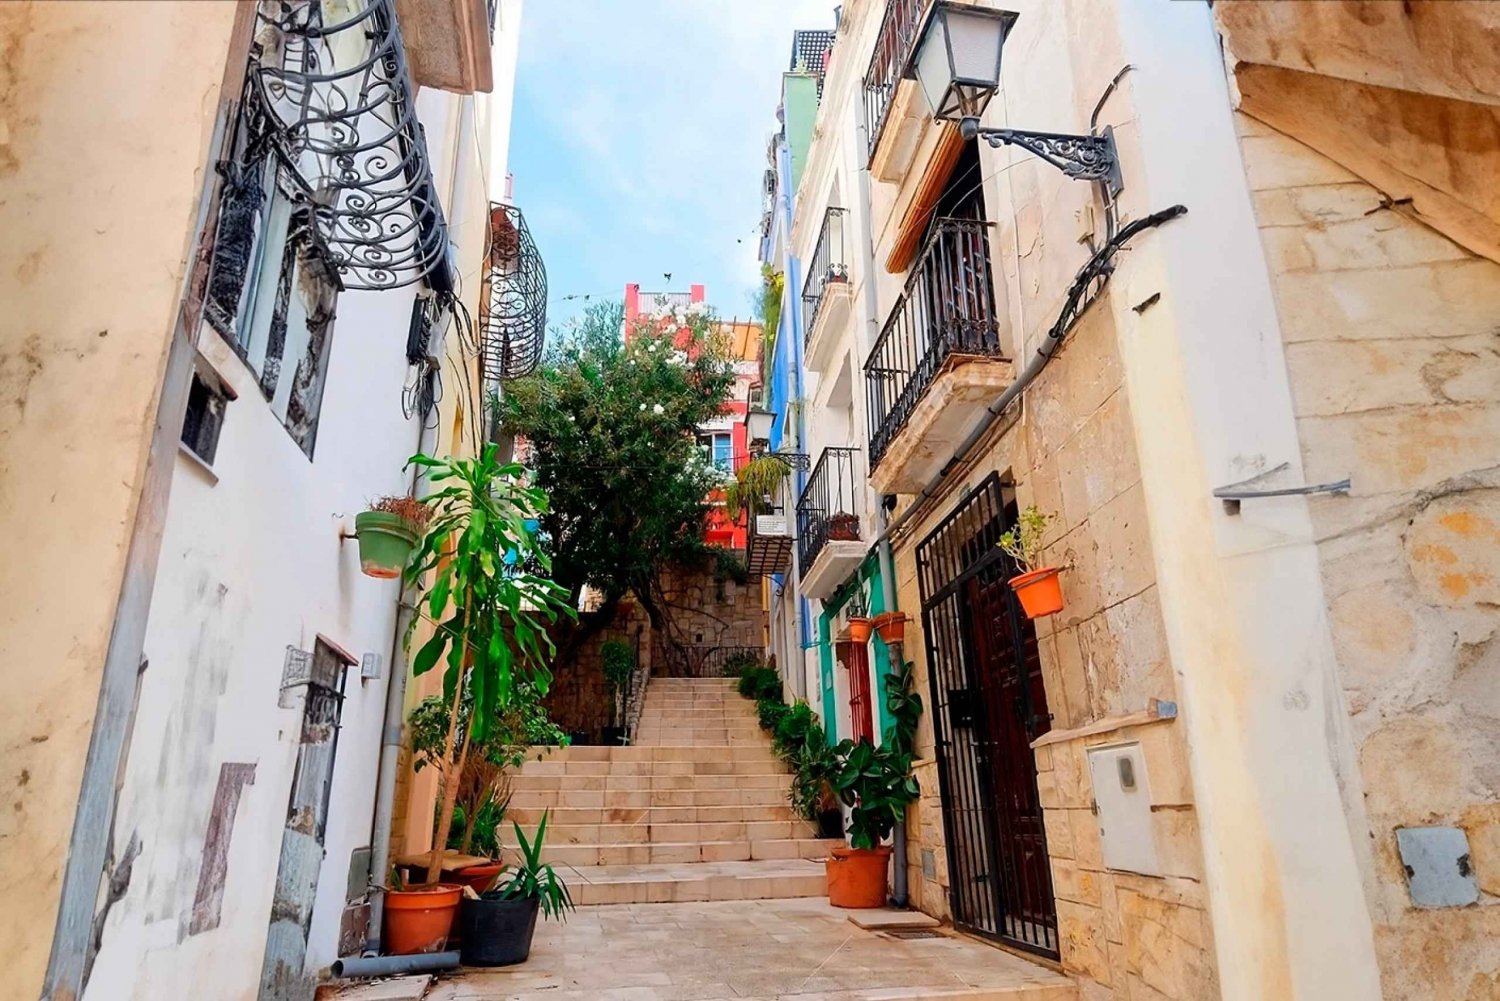 Alicante: Old town walking tour & paella show